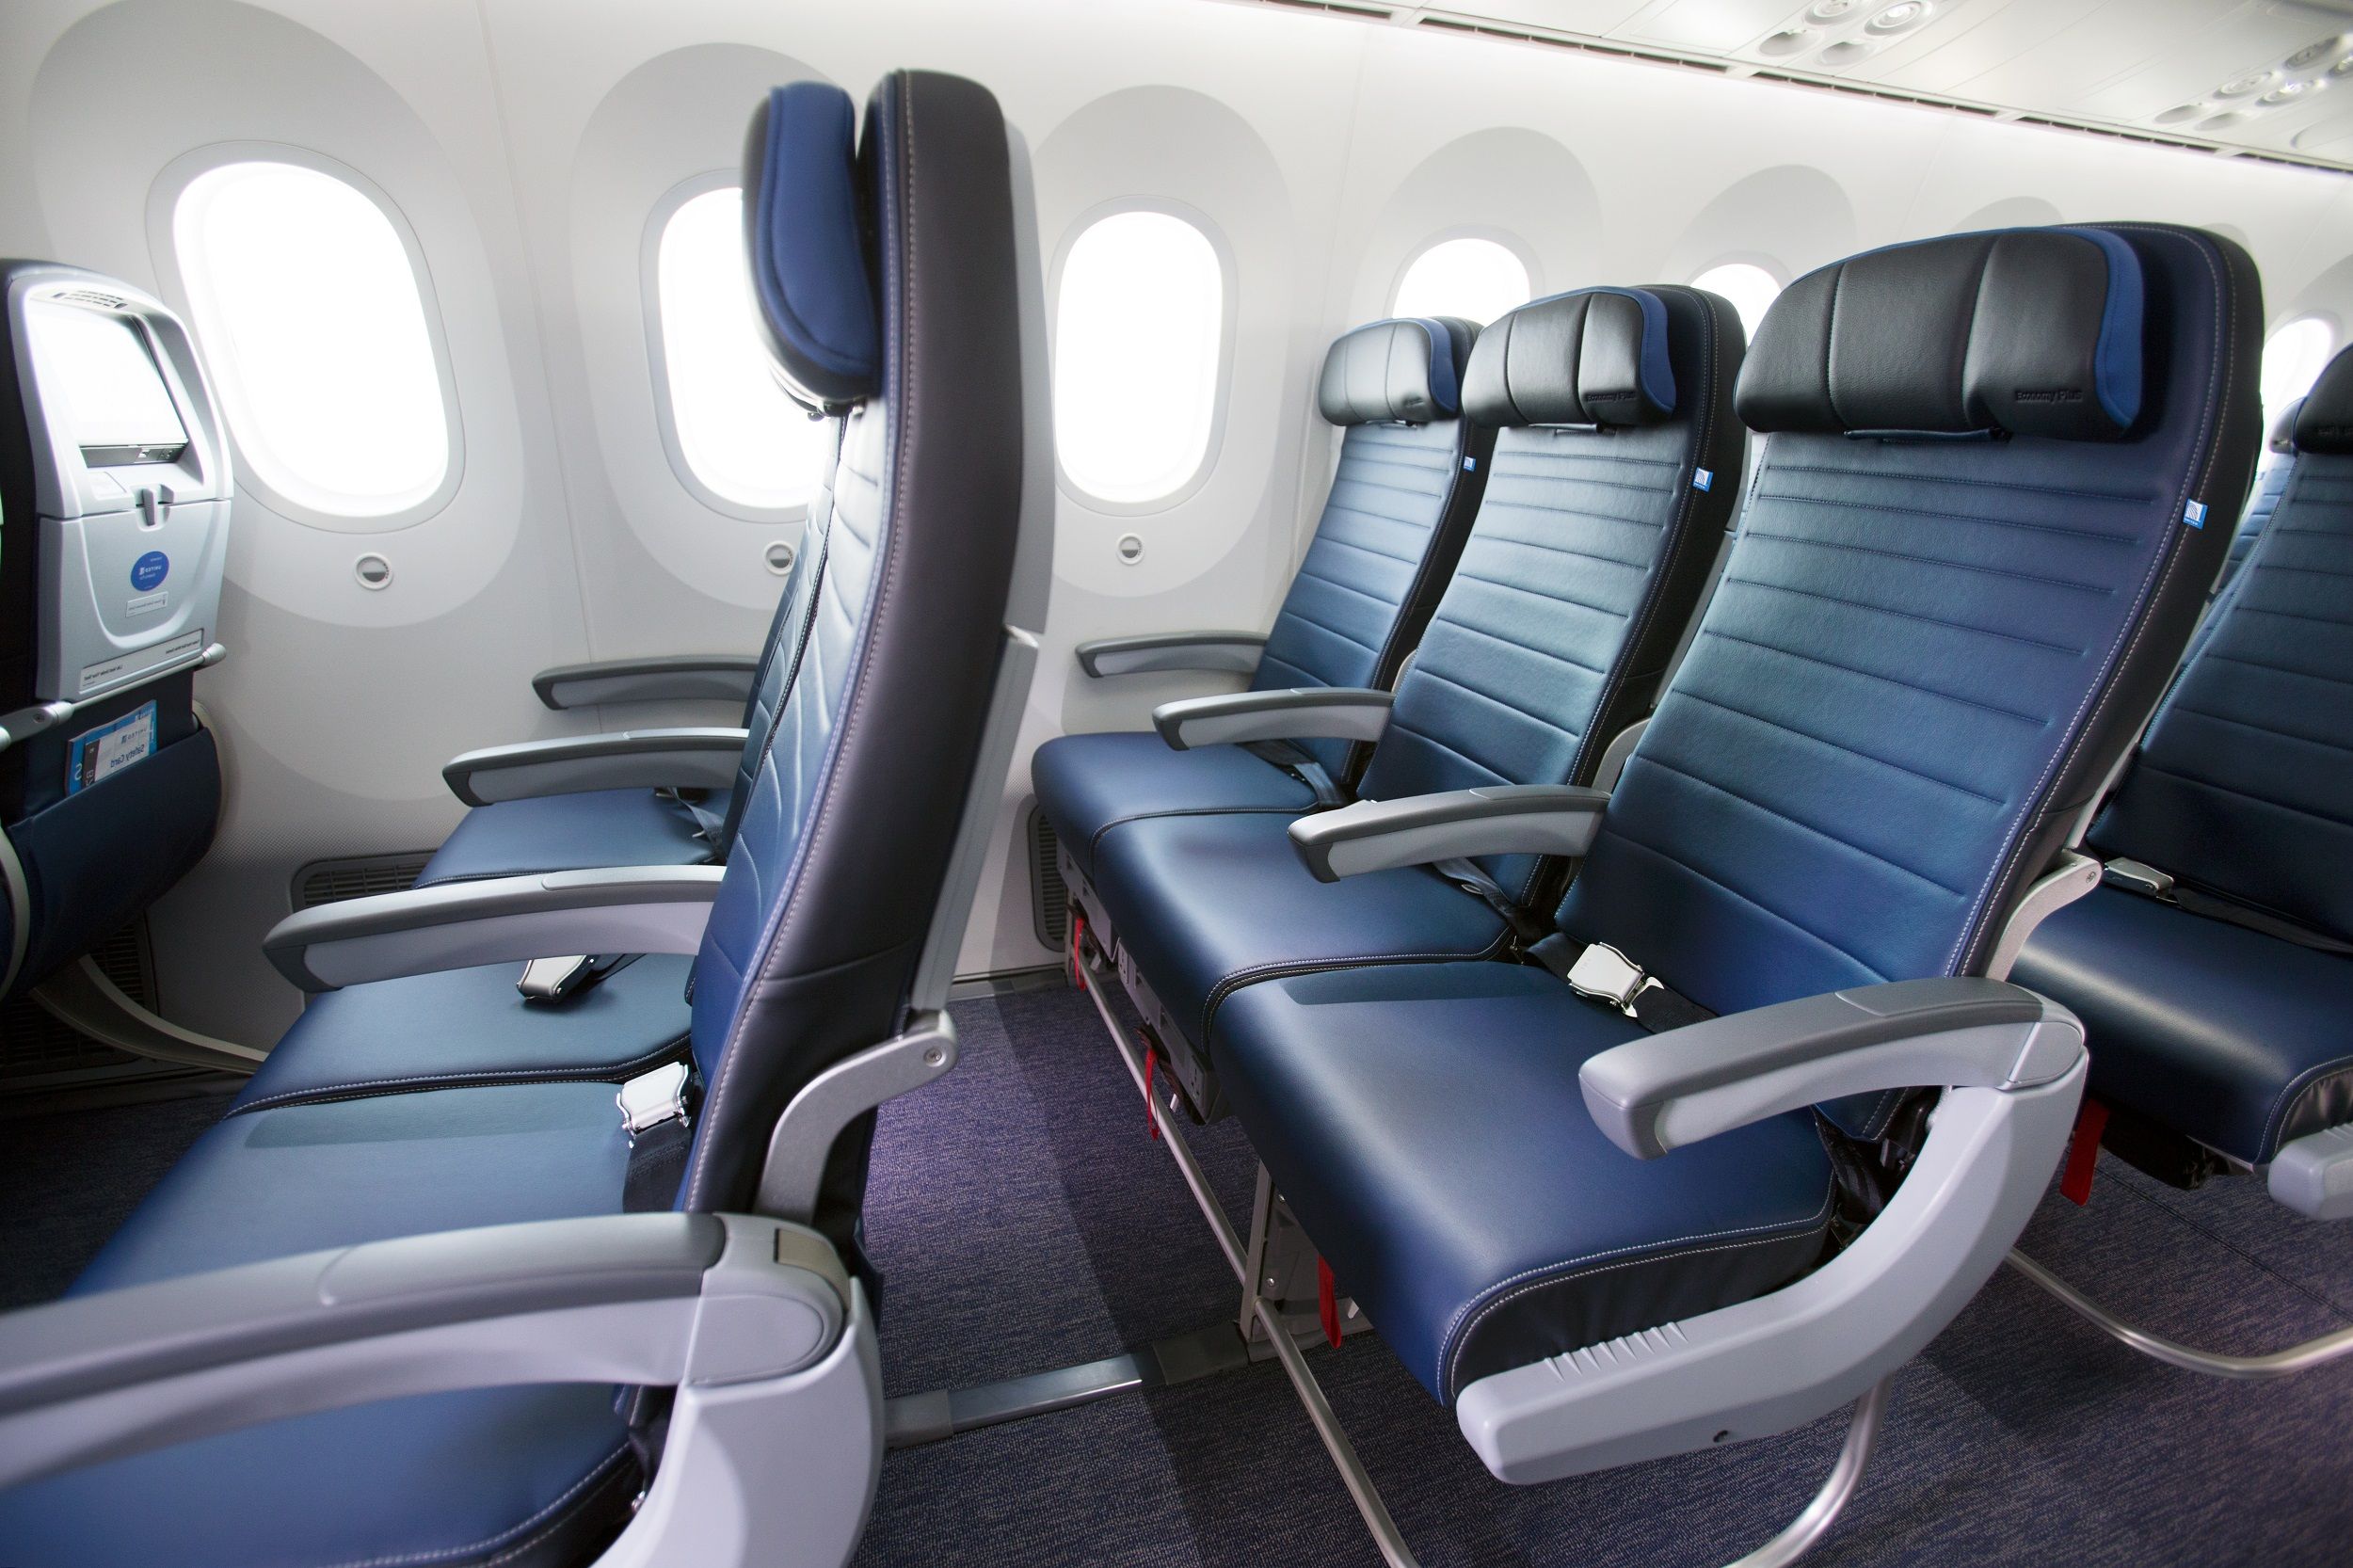 United Economy Plus seats on the Boeing 787.